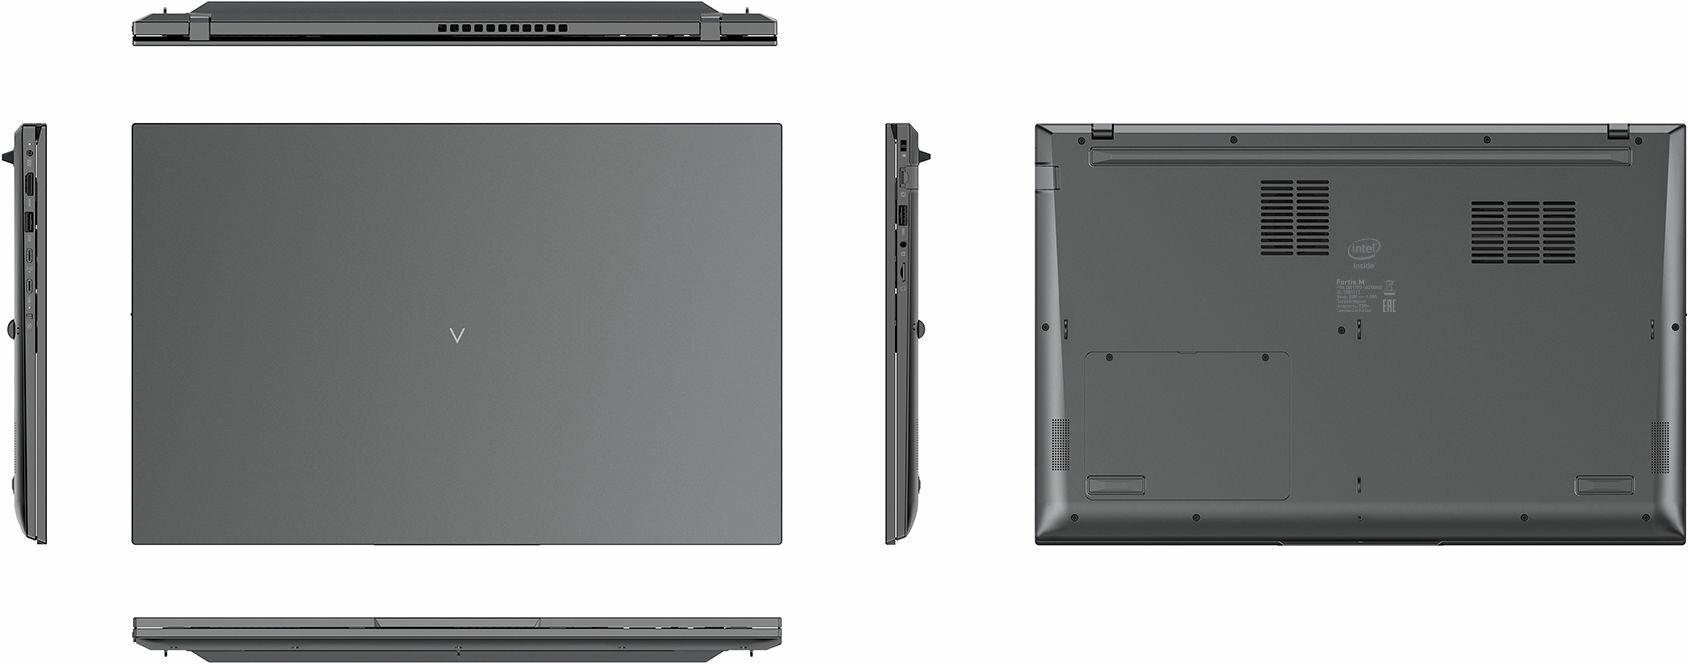 Ноутбук Digma Pro Fortis M, 17.3", IPS, Intel Core i5 1035G1, LPDDR4x 16ГБ, SSD 512ГБ, Intel UHD Graphics, серый (dn17p5-adxw02)